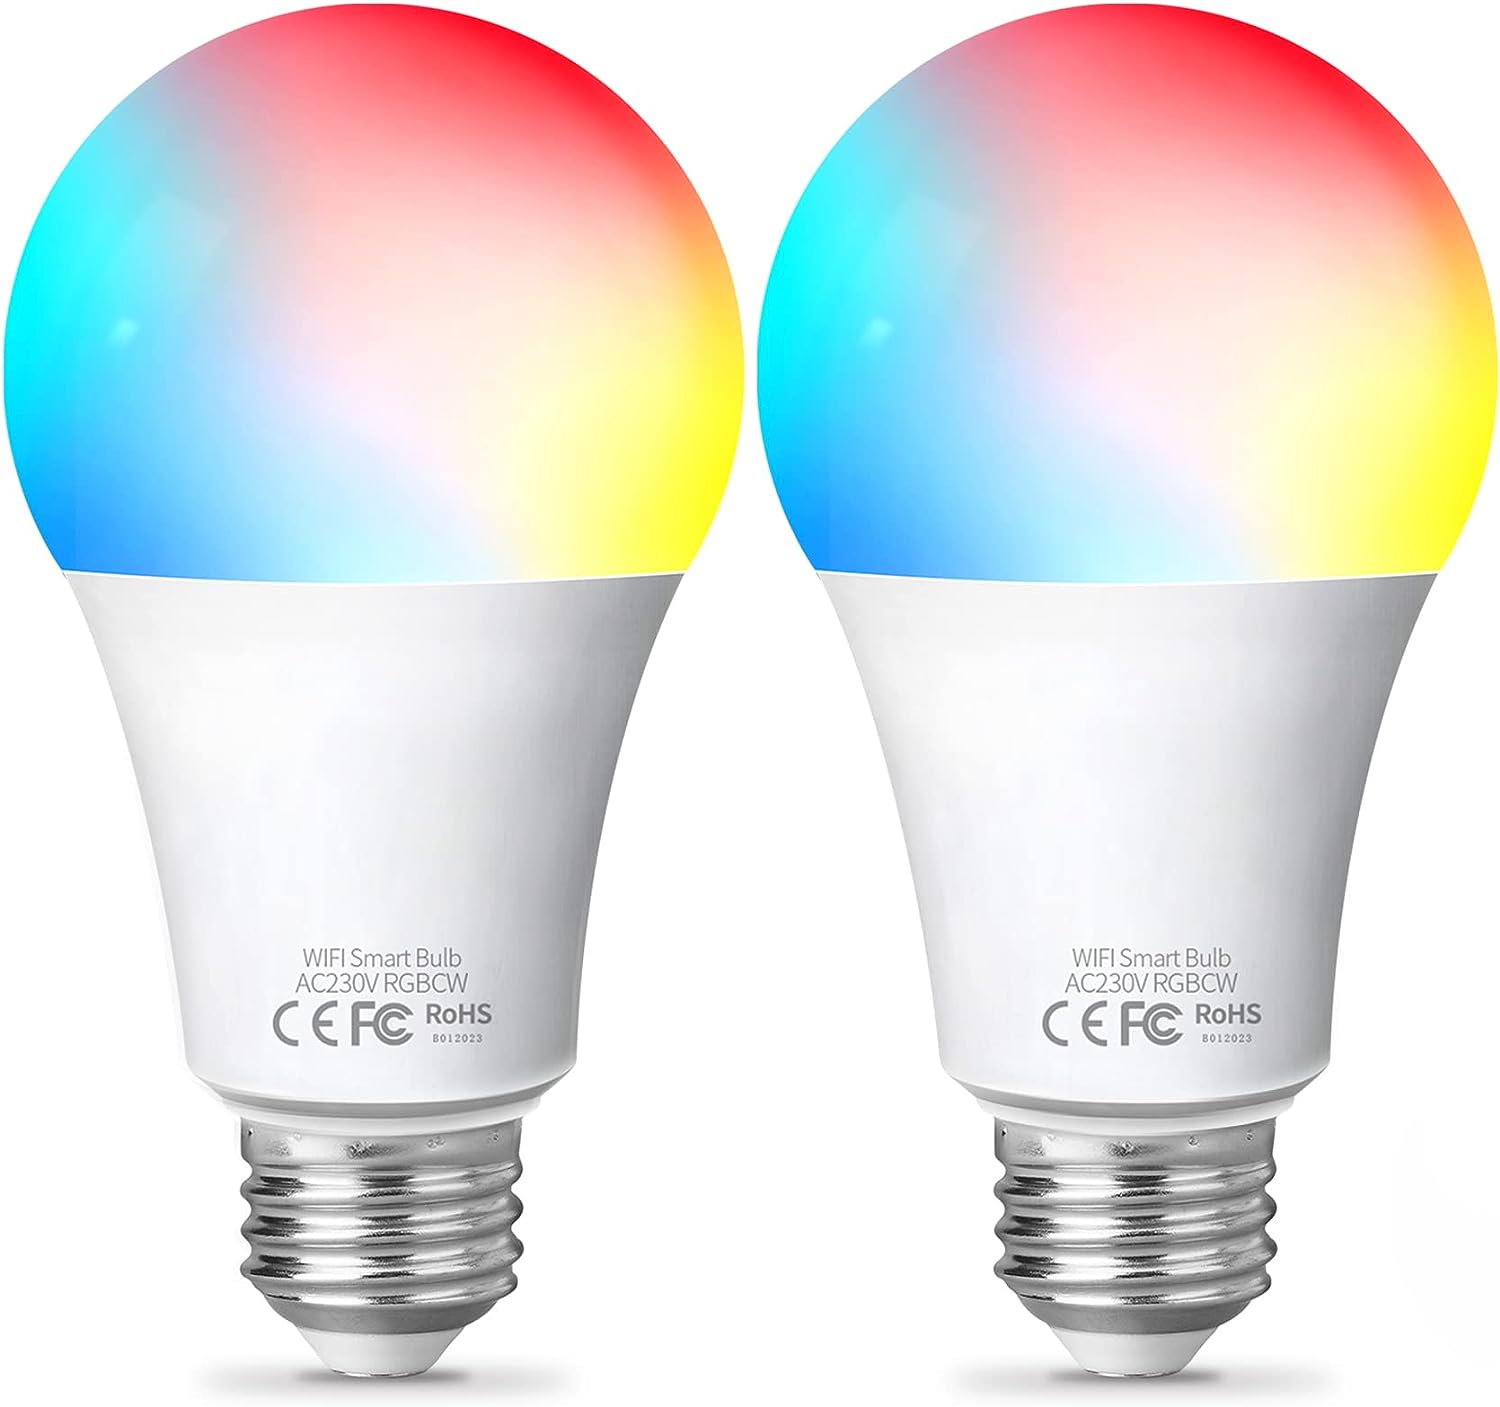 Fitop Alexa Glühbirne Smart Lampe E27, WLAN Lampe LED Kompatibel mit Alexa/Google Home, 9W, Dimmbar Warmweiß-Kaltweiß und Mehrfarbige Birne, Kontrolle durch APP, Kein Hub Benötigt, 2 Stück